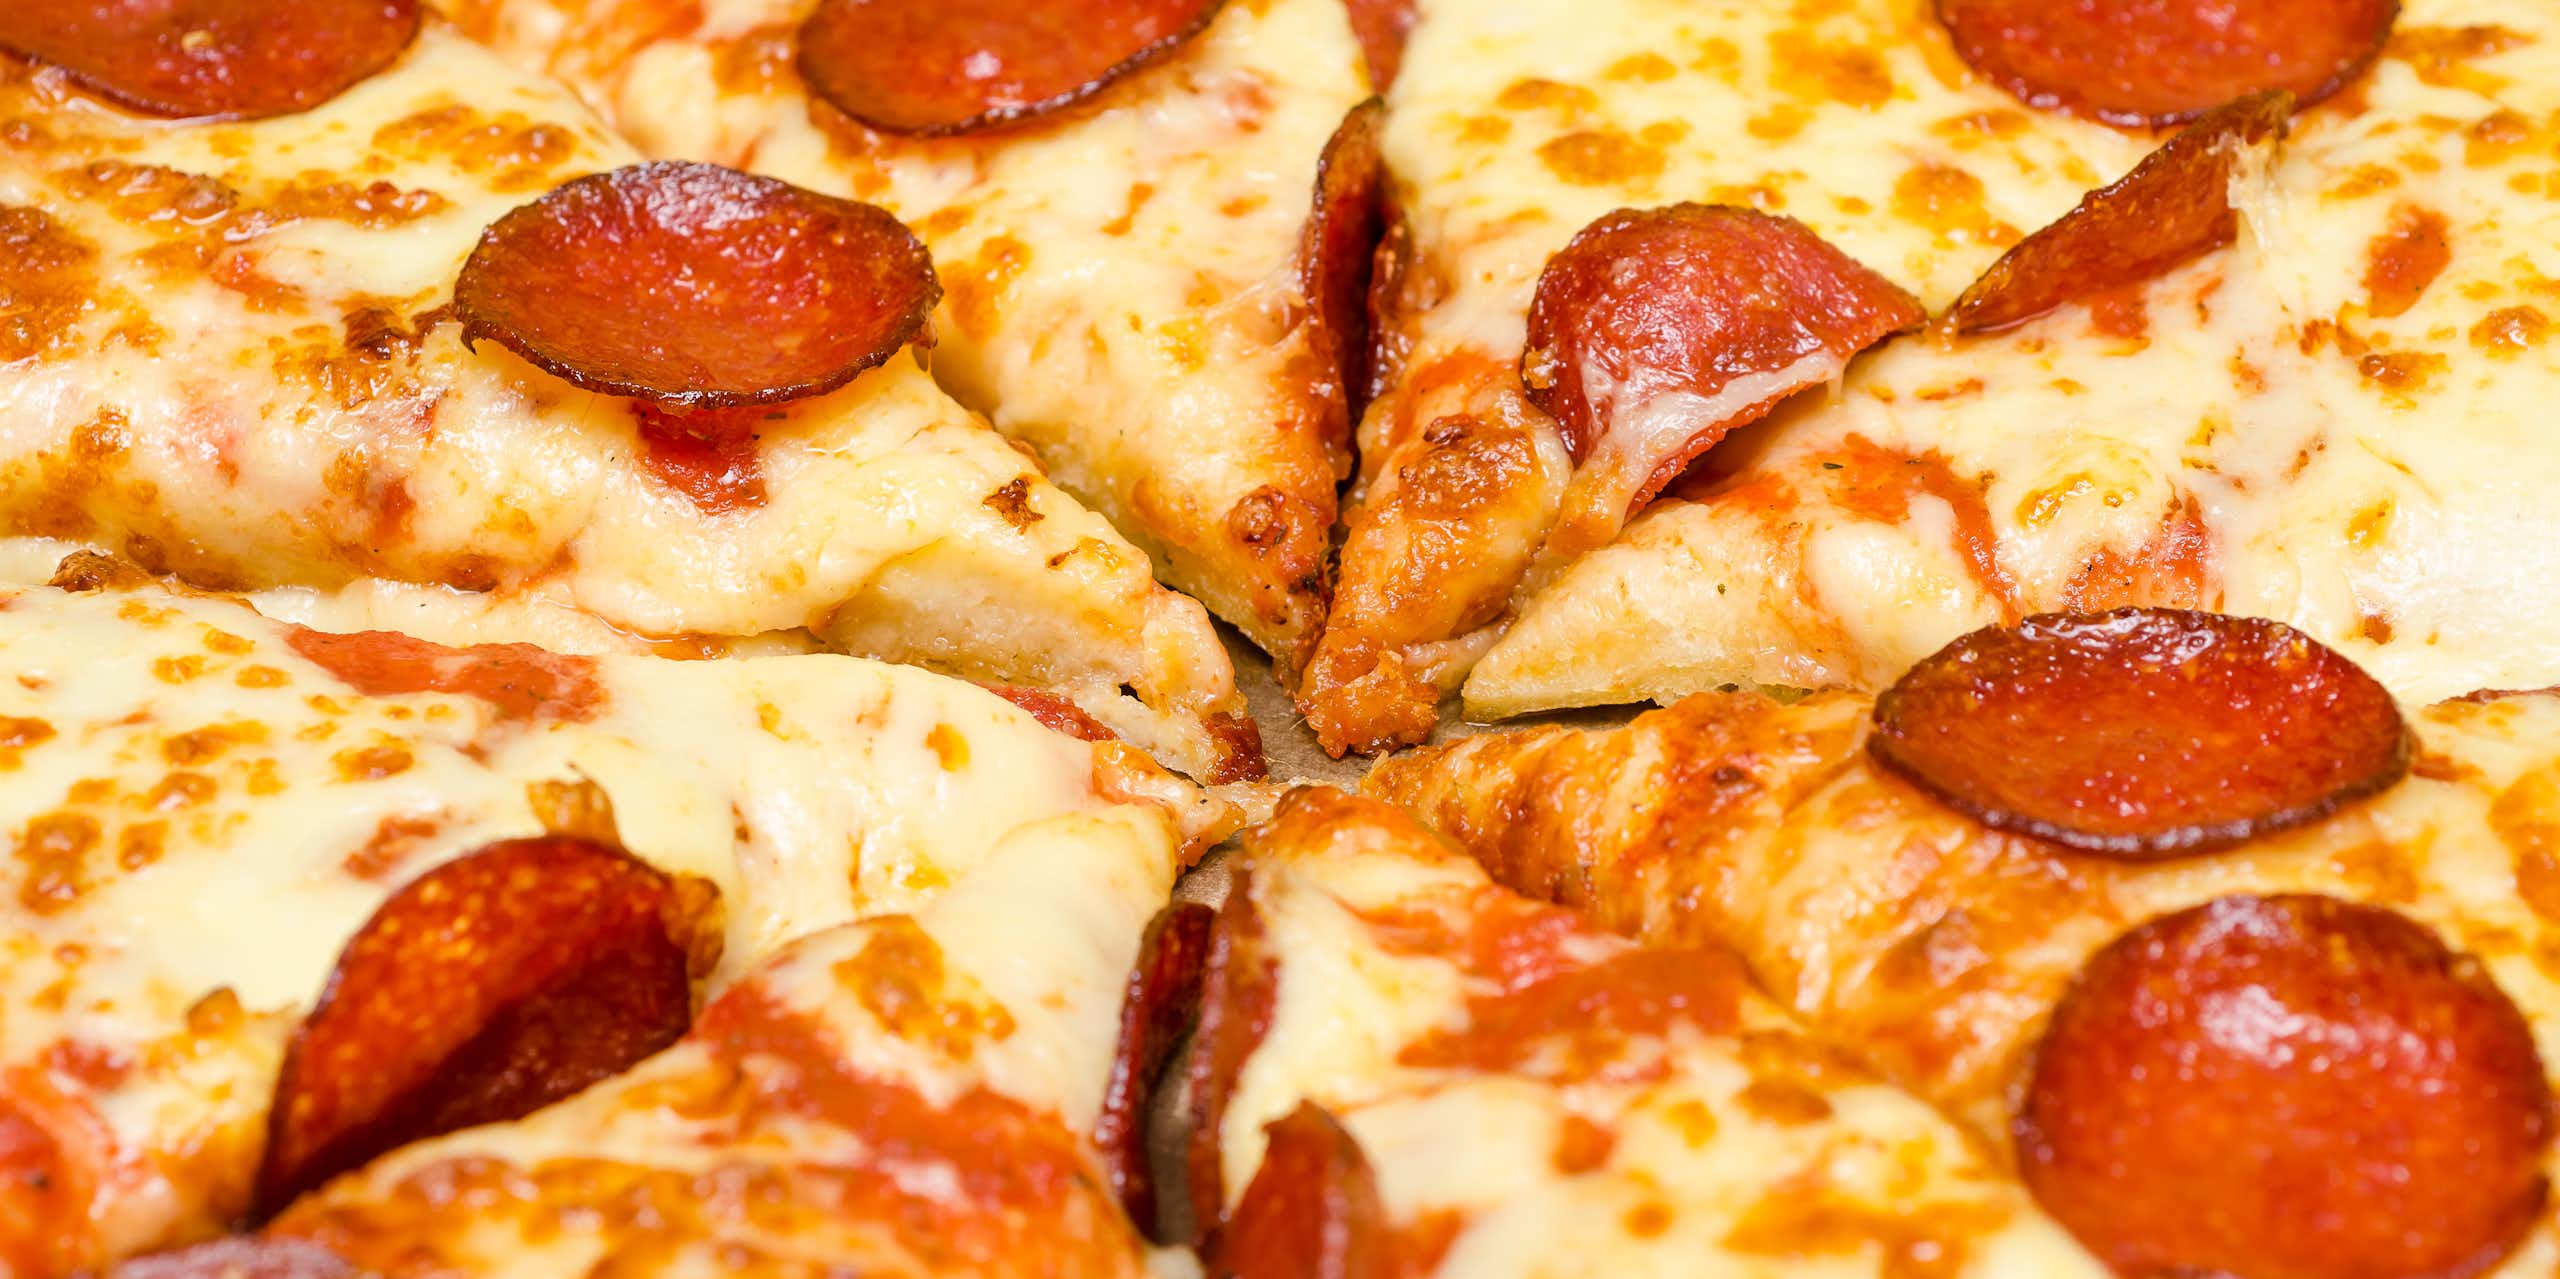 Why does pizza taste so good?